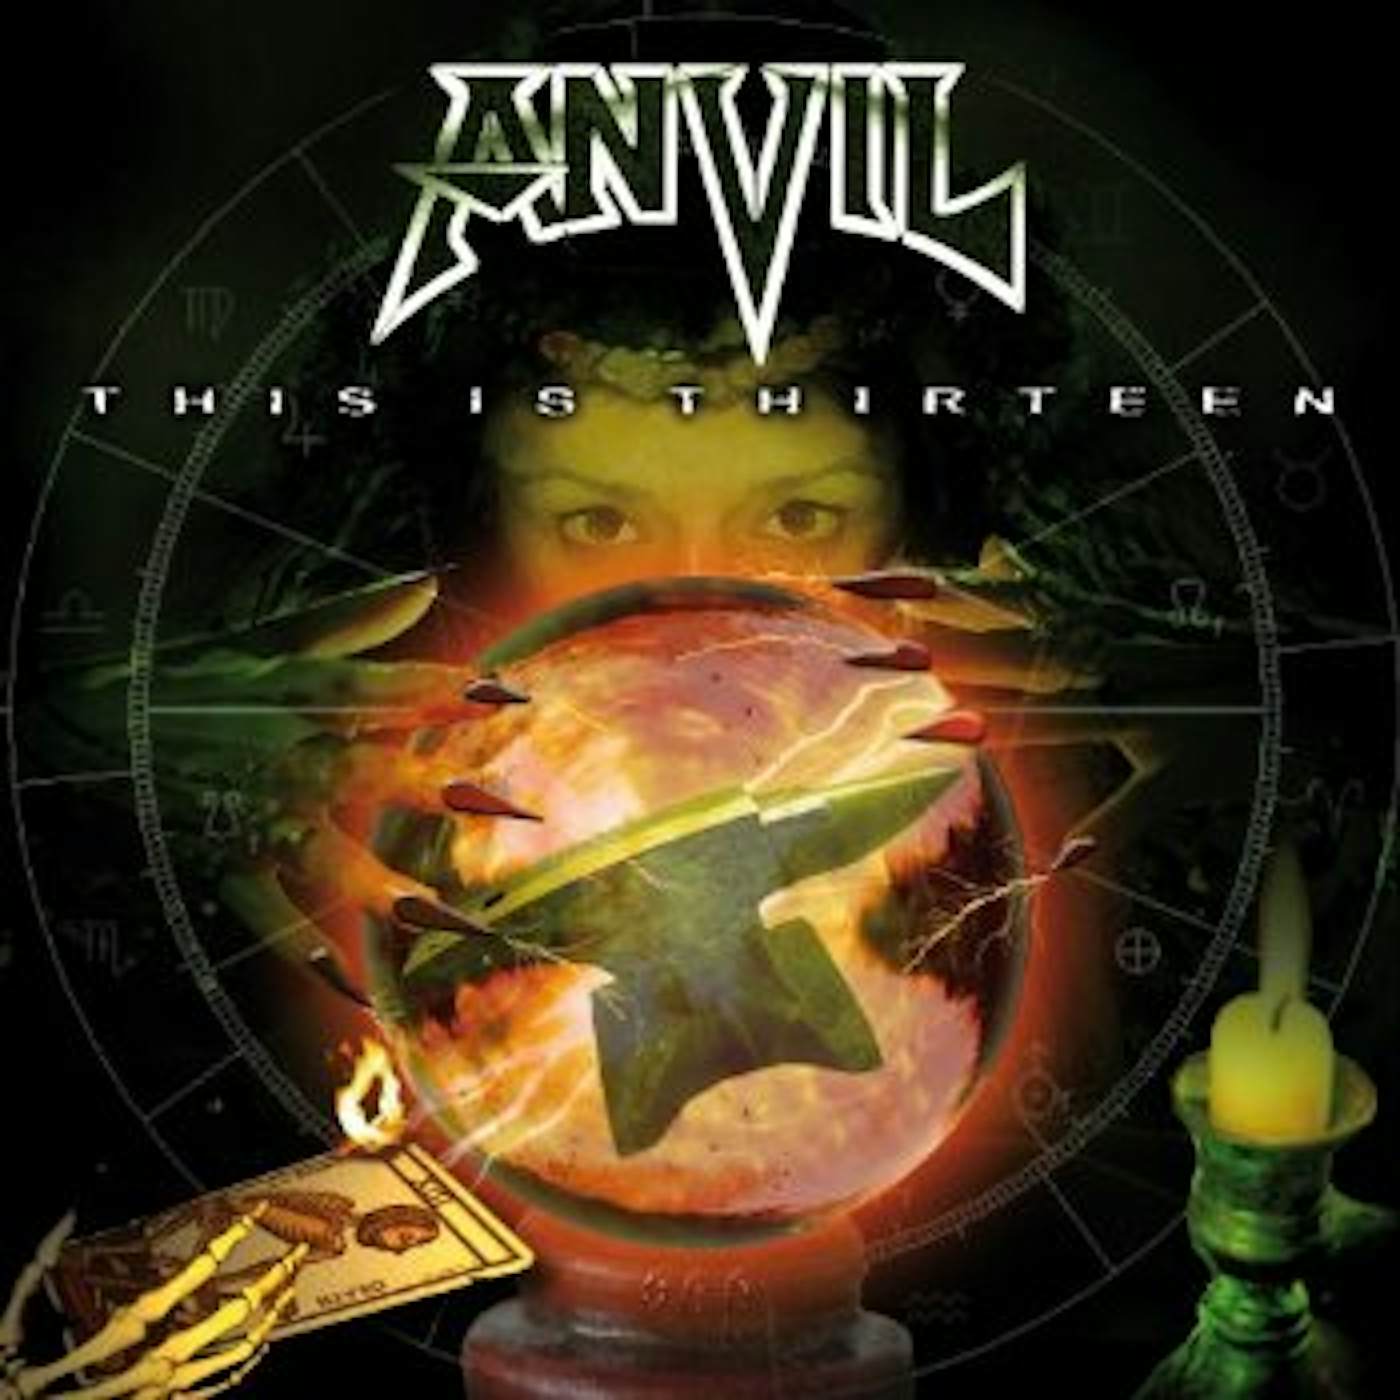 Anvil THIS IS THIRTEEN CD